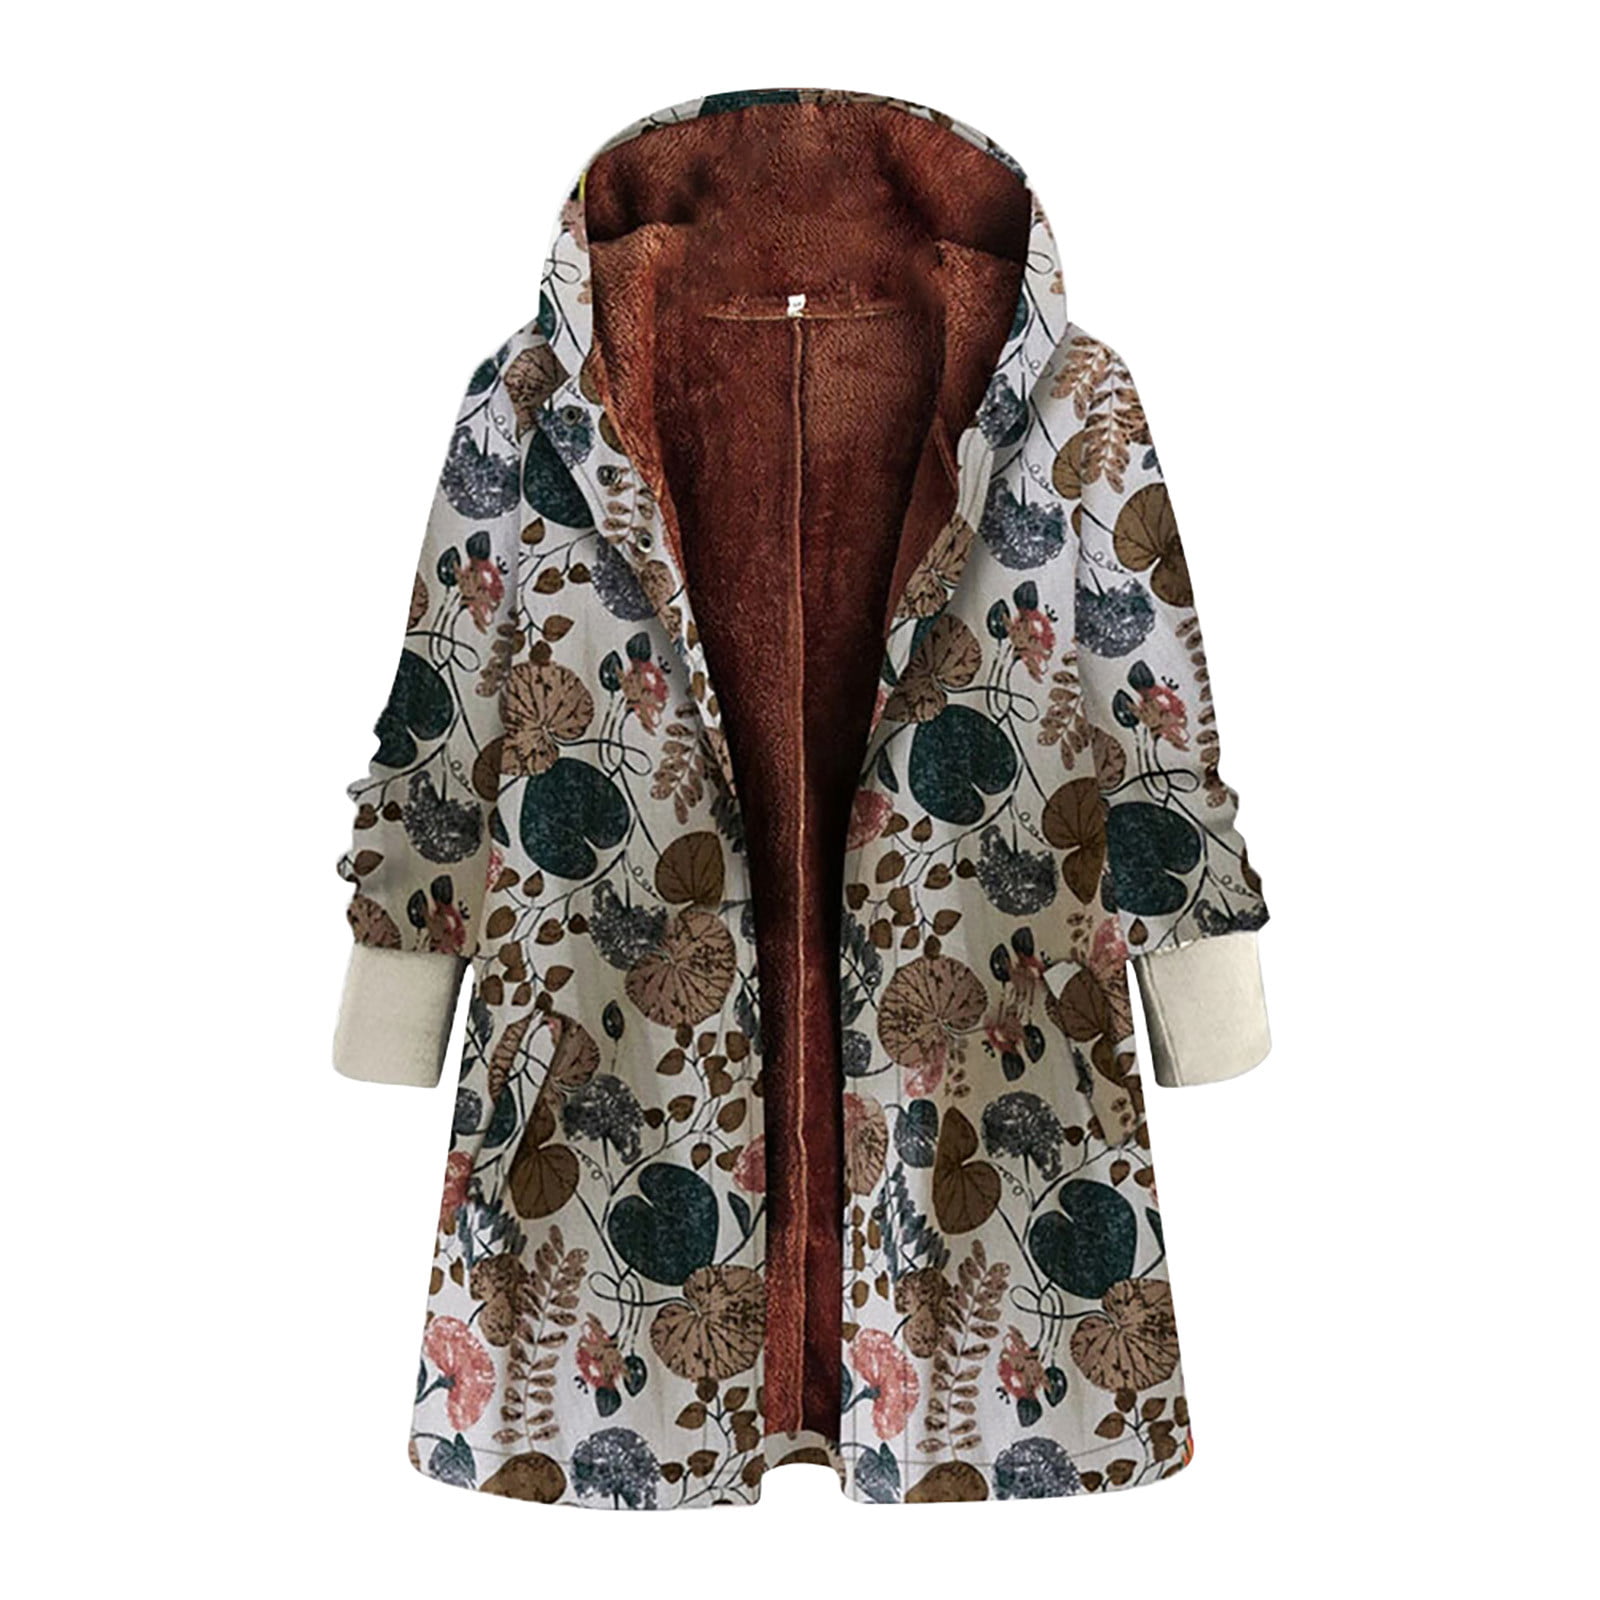 Womens Winter Warm Coat Plus Size Vintage Floral Print Hooded Pockets Fleece Thick Coats Jackets Outwear Parka 